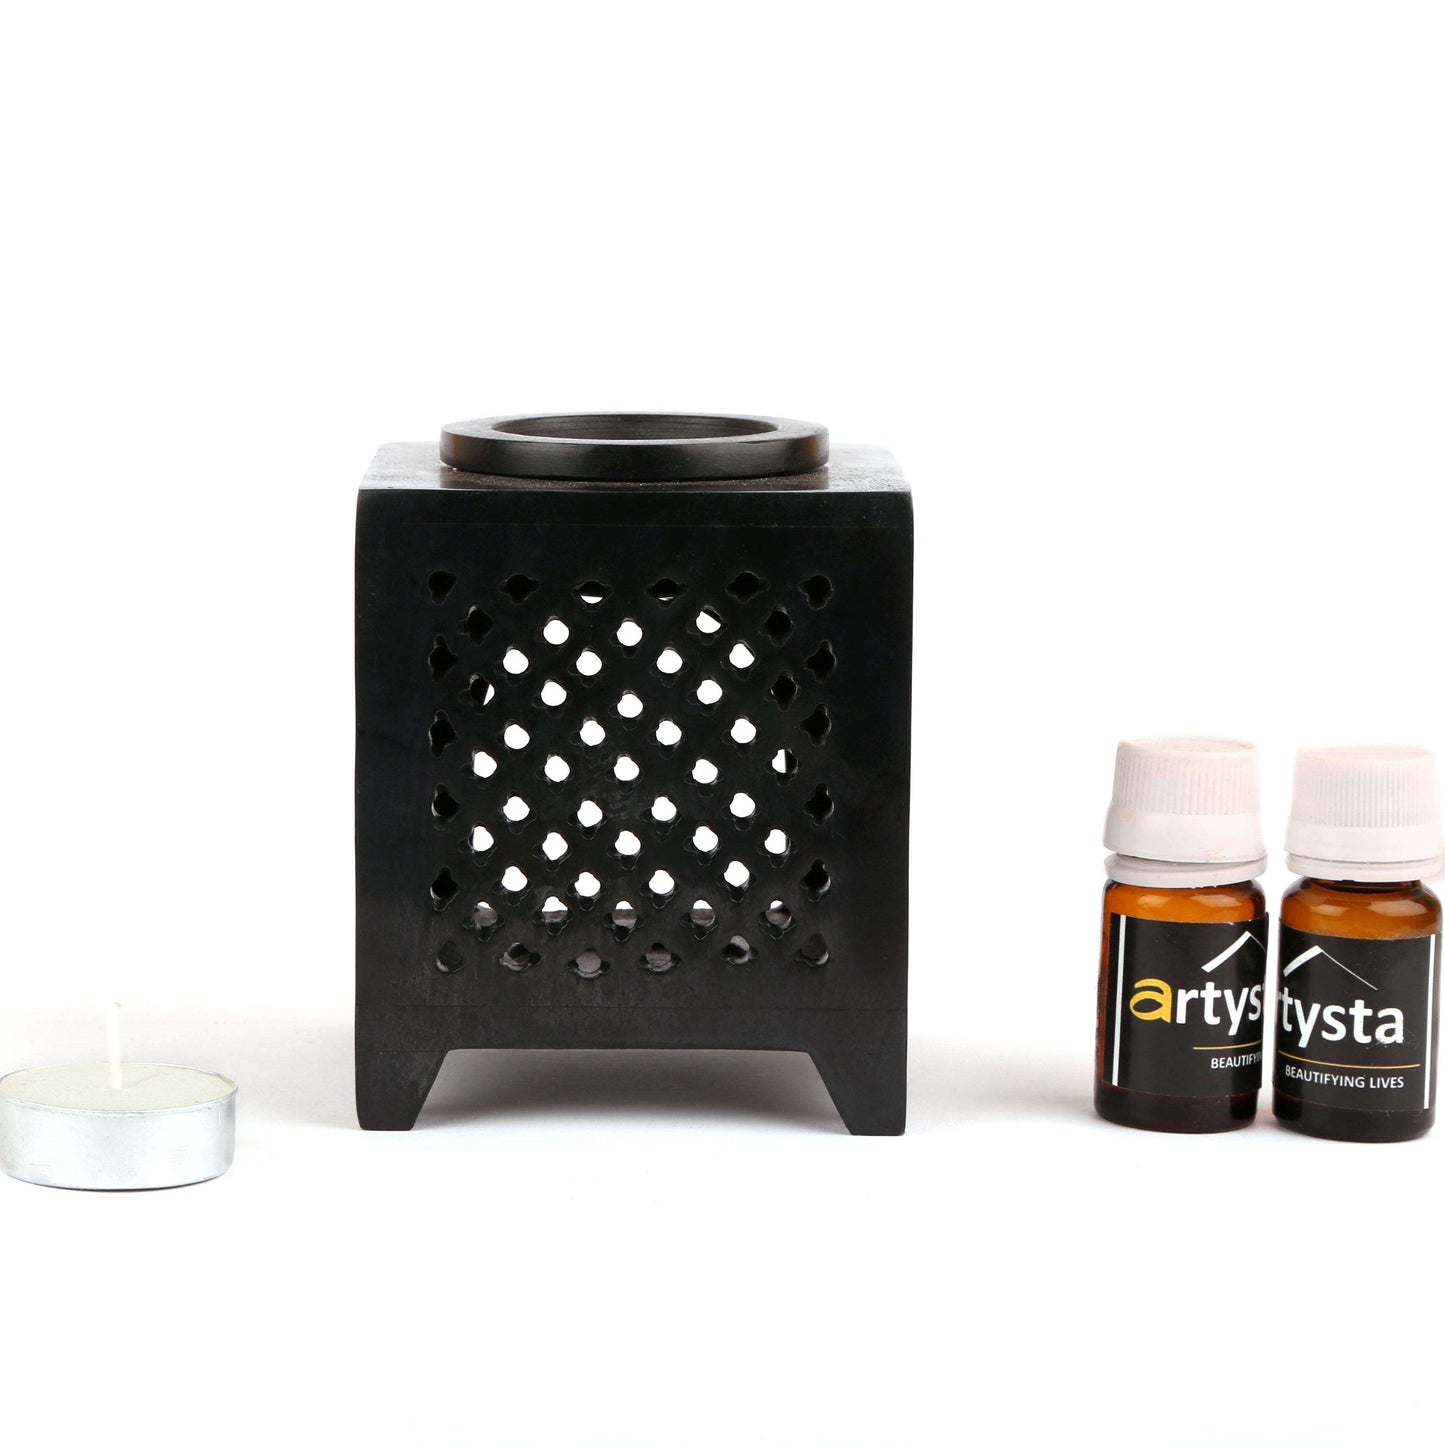 Black Aroma Oil Burner With Fragrances - artystagallery